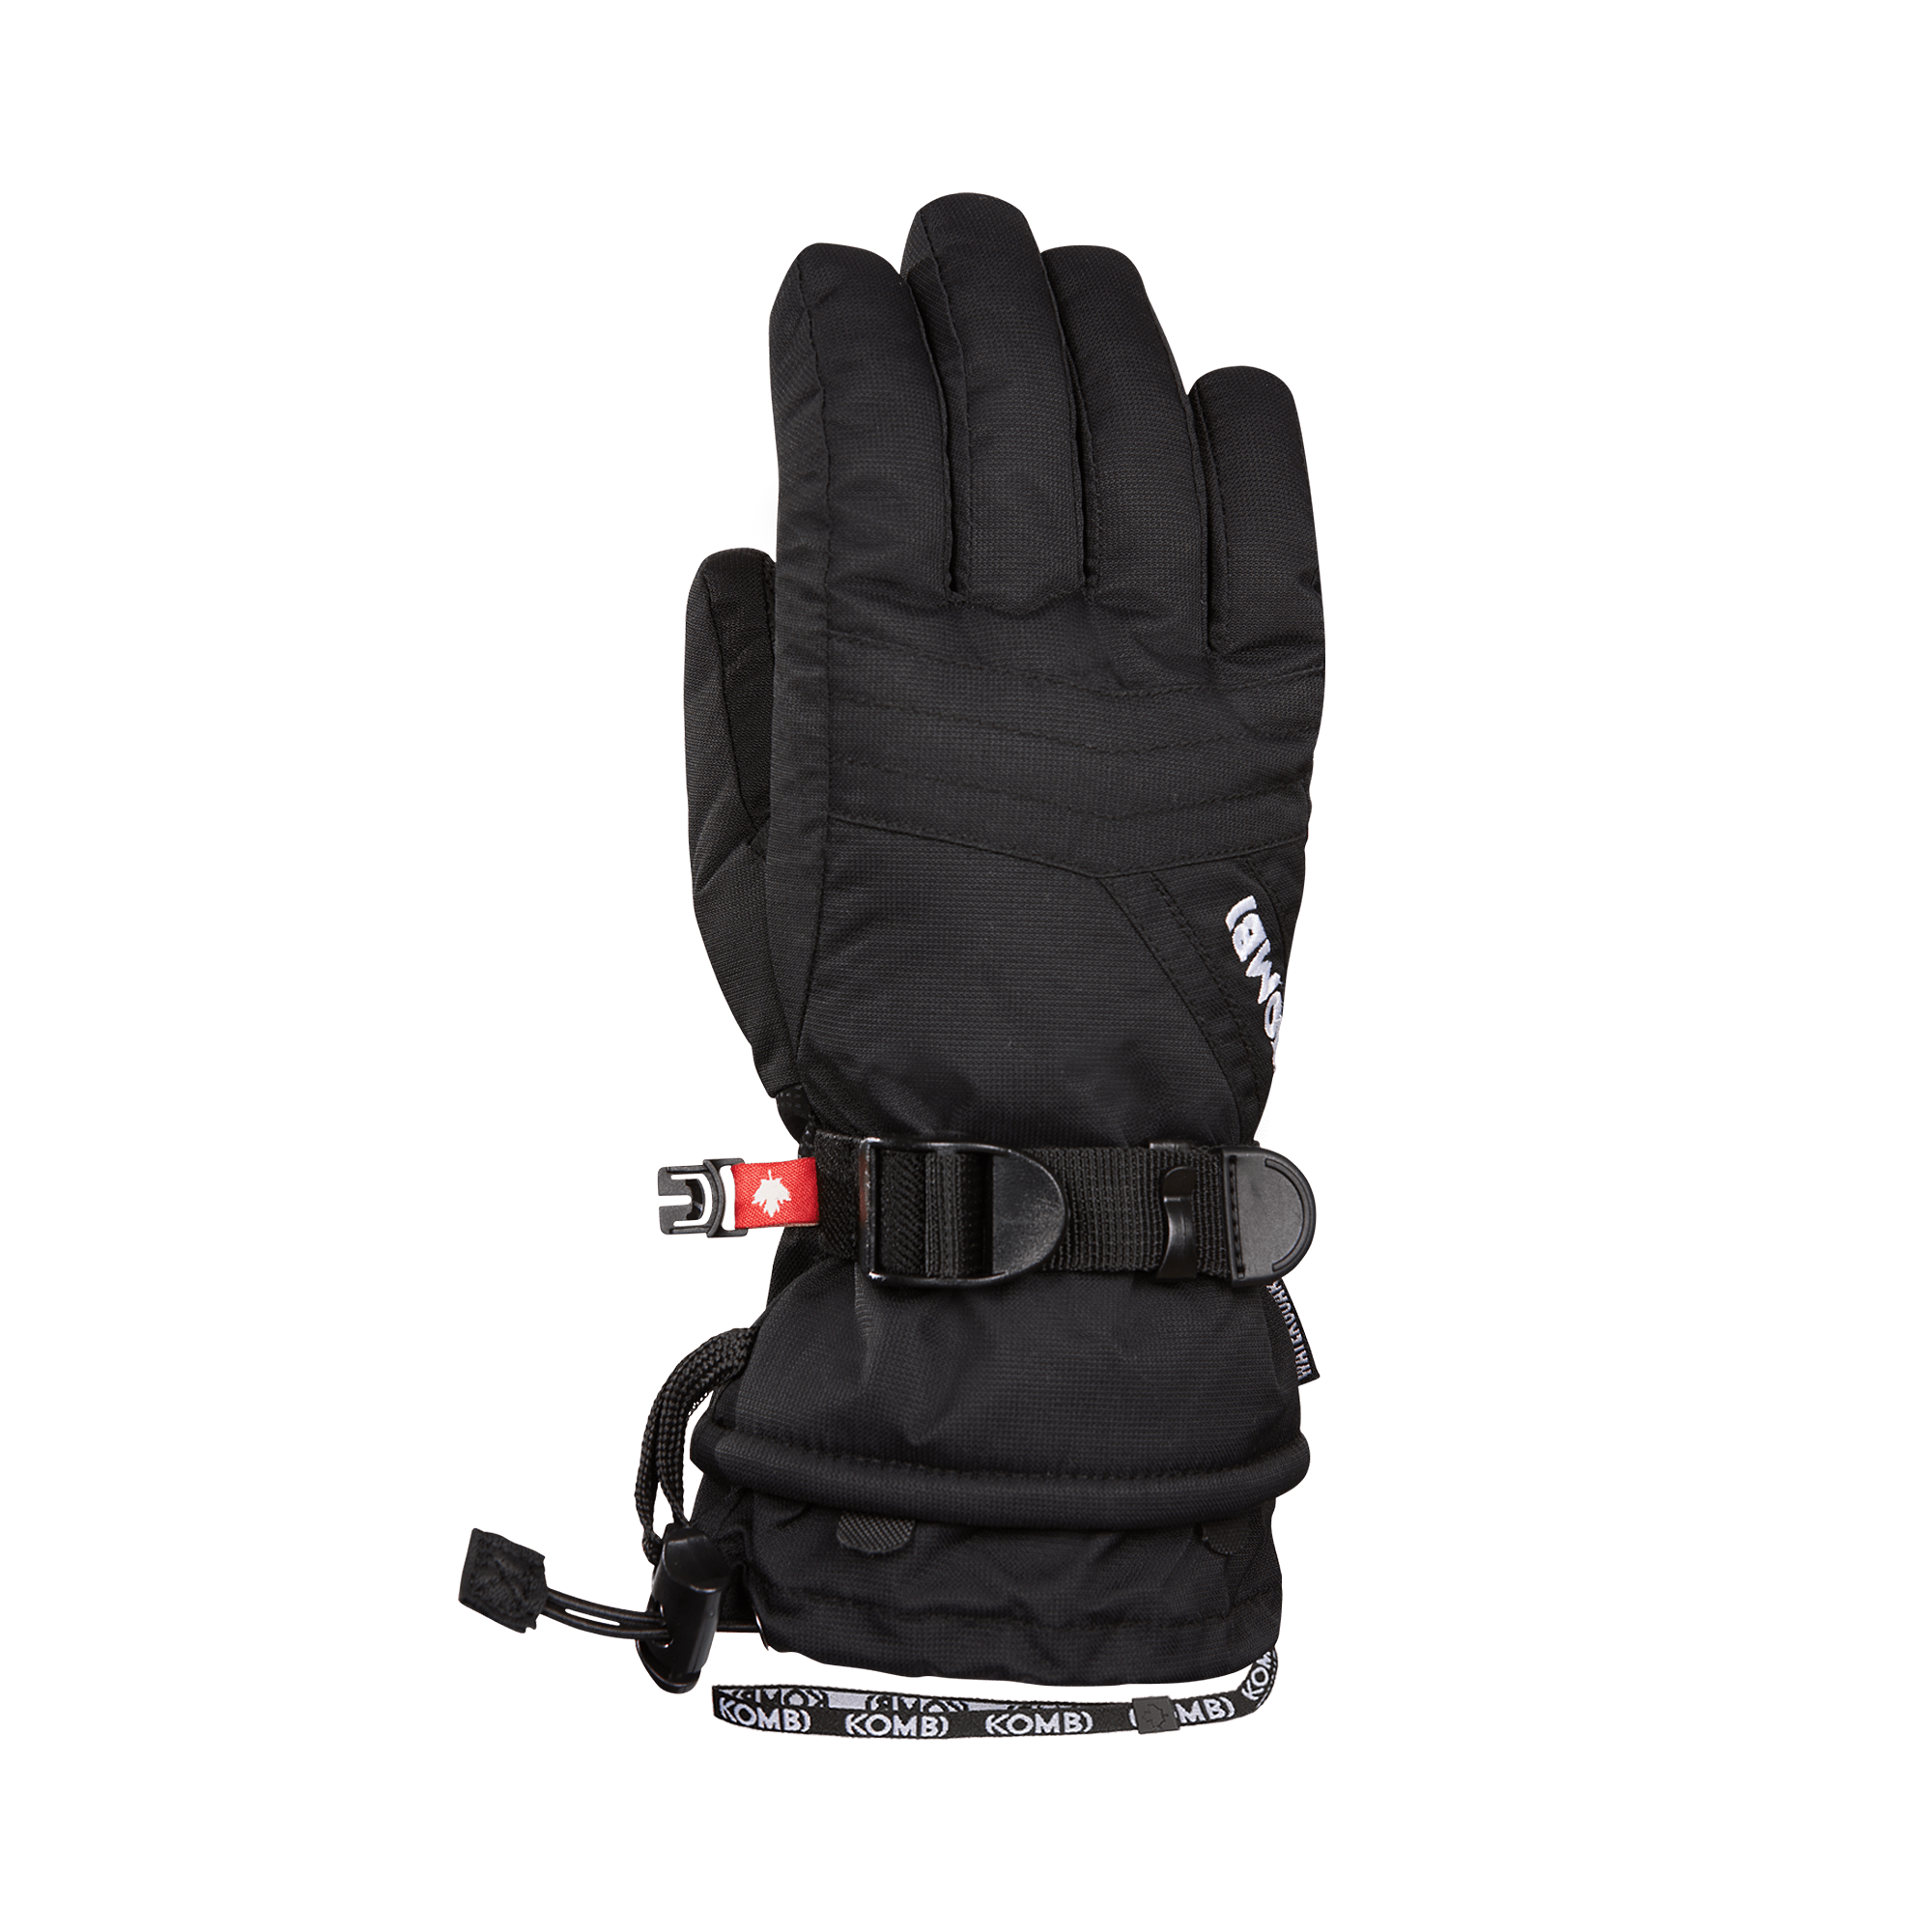 Back of Palm View - Black Kombi Zenith Junior GORE-TEX Glove